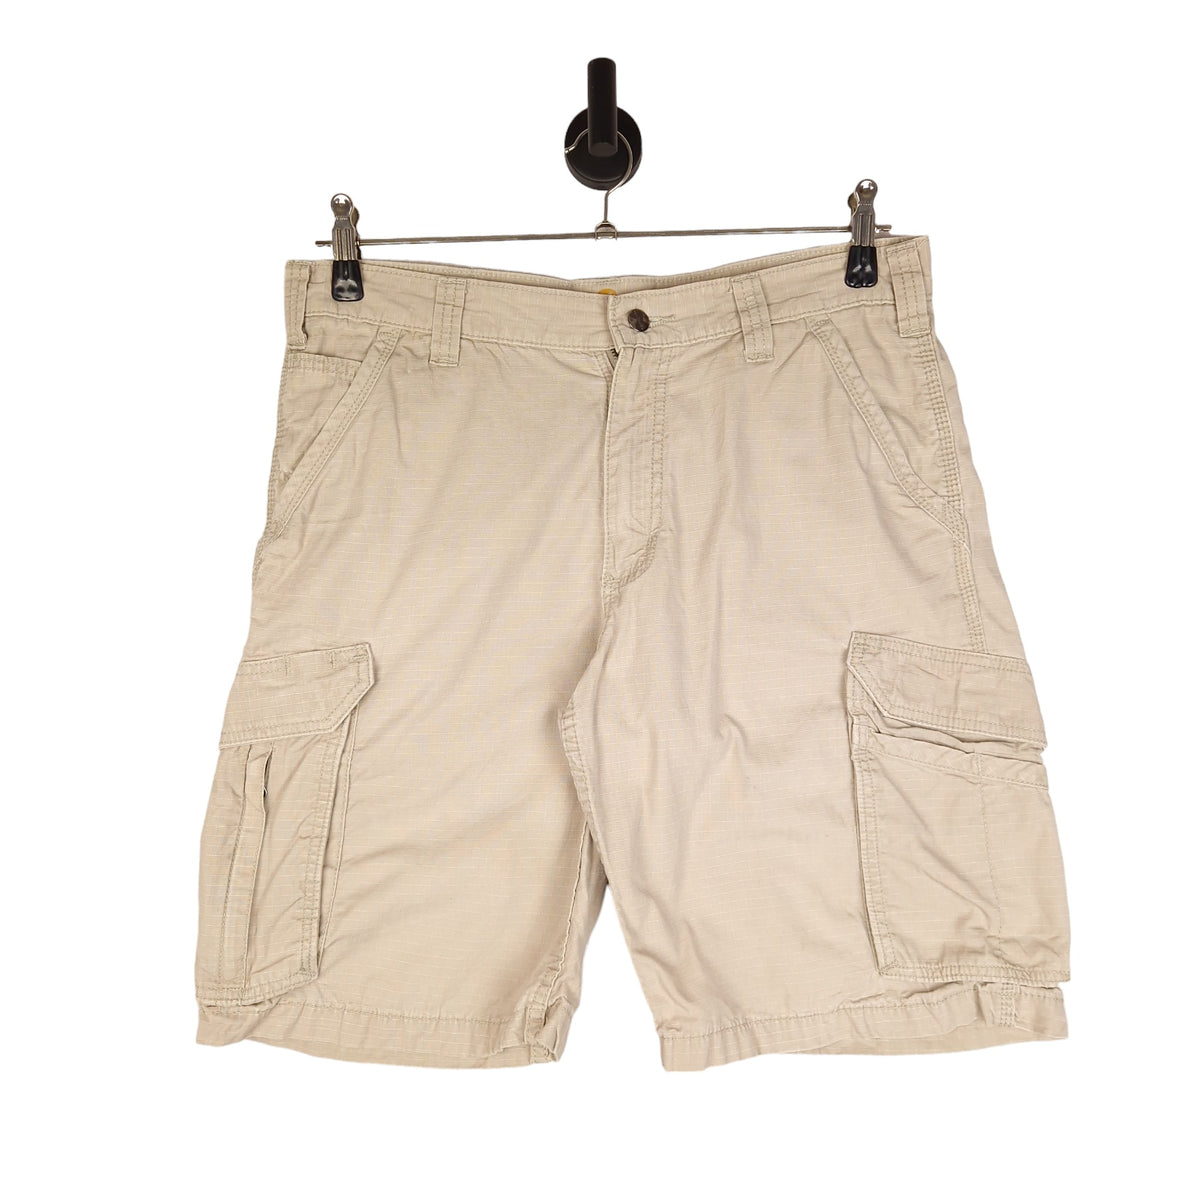 Carhartt Cargo Shorts - Size W35